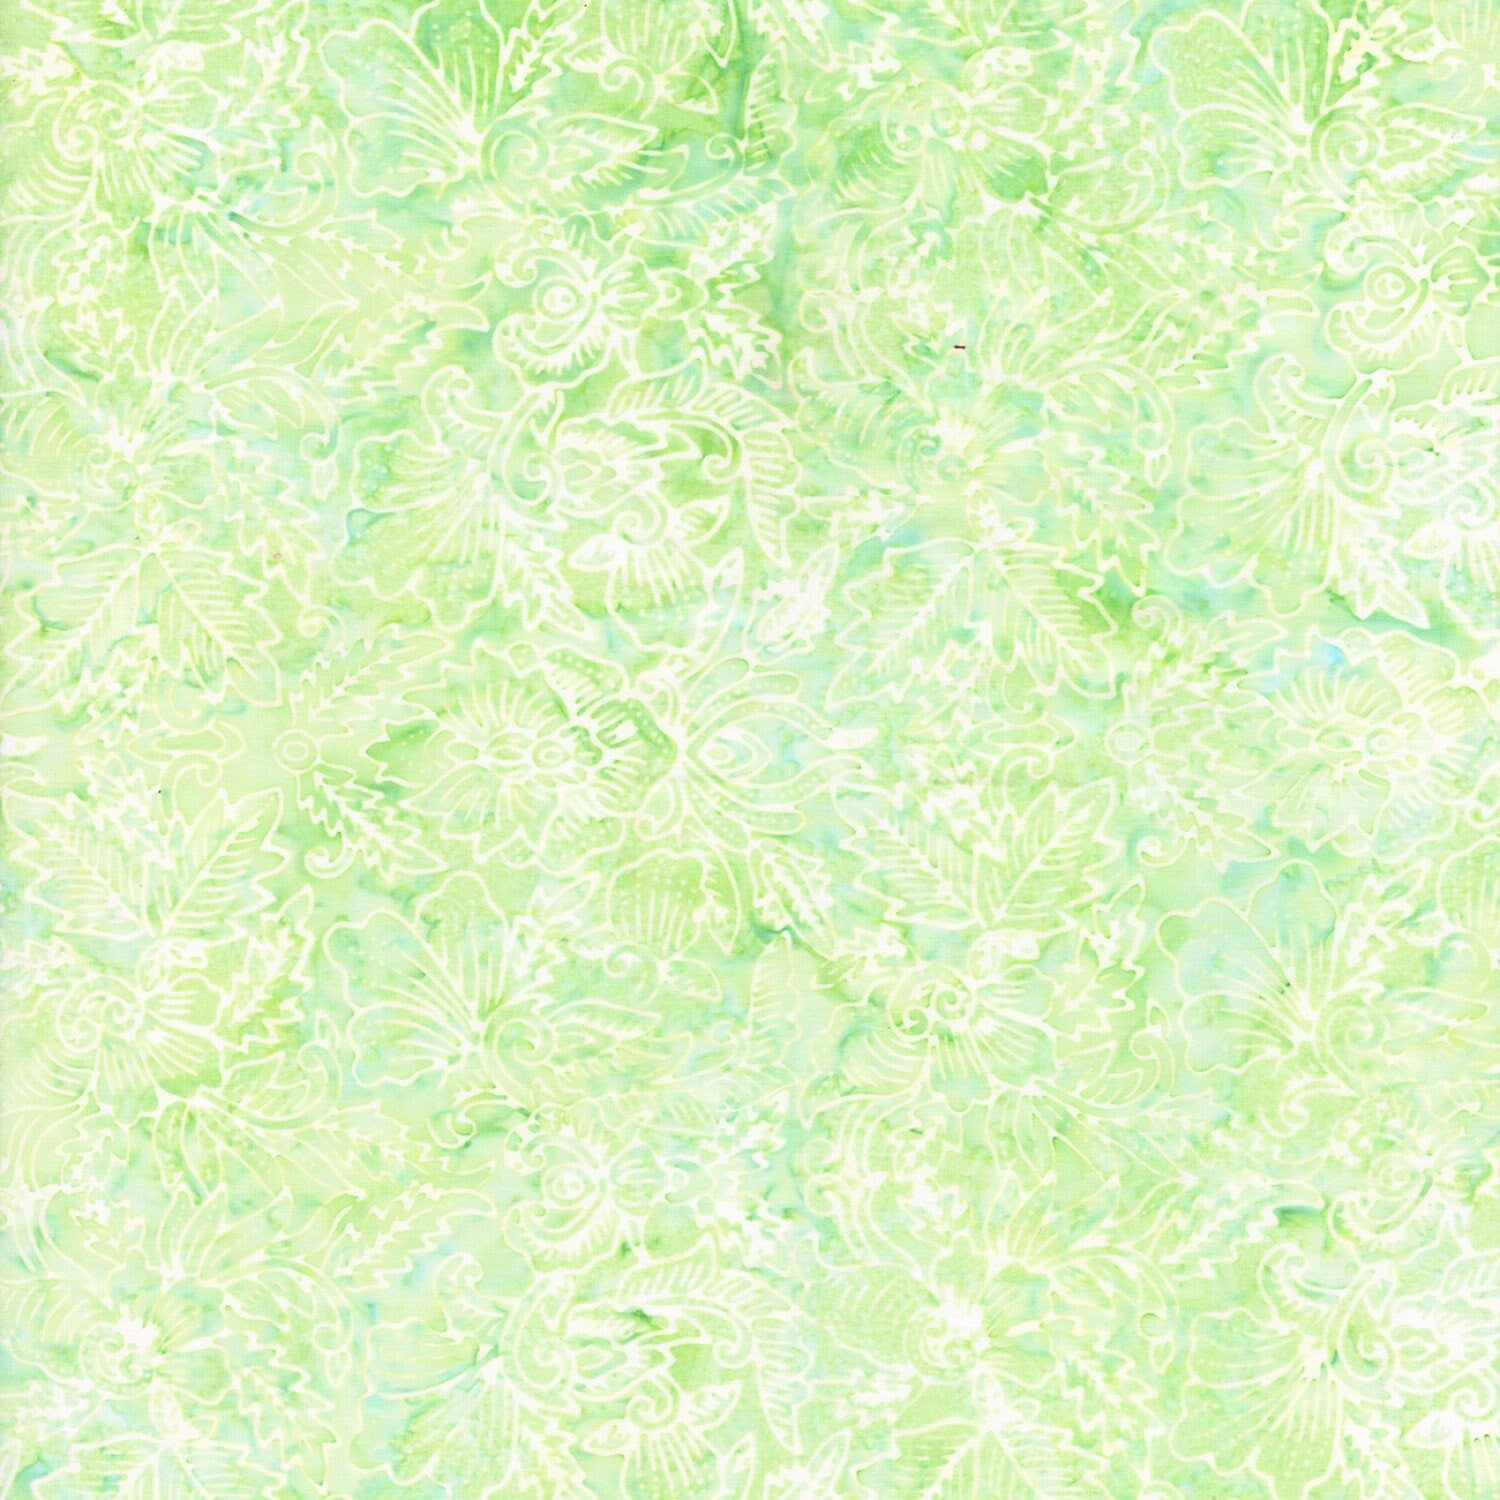 Tonga Batiks Mariposa - Pastel Green Tonal Batik Fabric, Timeless Treasures B1757 Leaf, Light Green Batiks, By the Yard